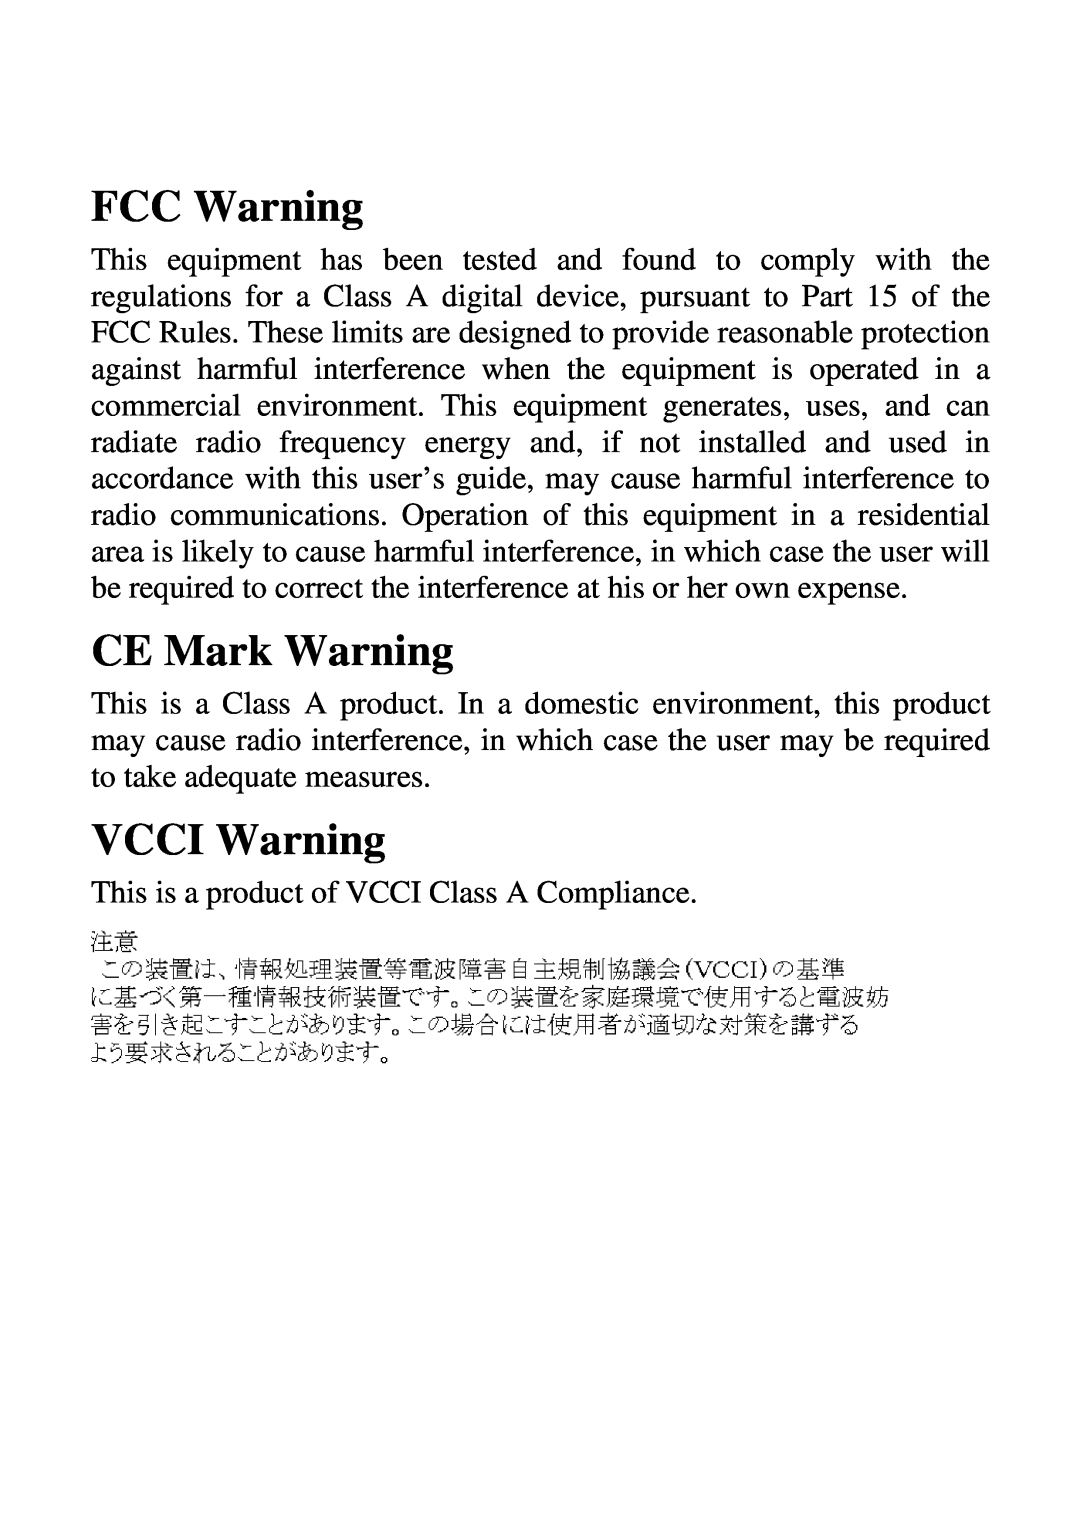 TRENDnet 21000BASE-T, 2410/100BASE-TX manual FCC Warning, CE Mark Warning, VCCI Warning 